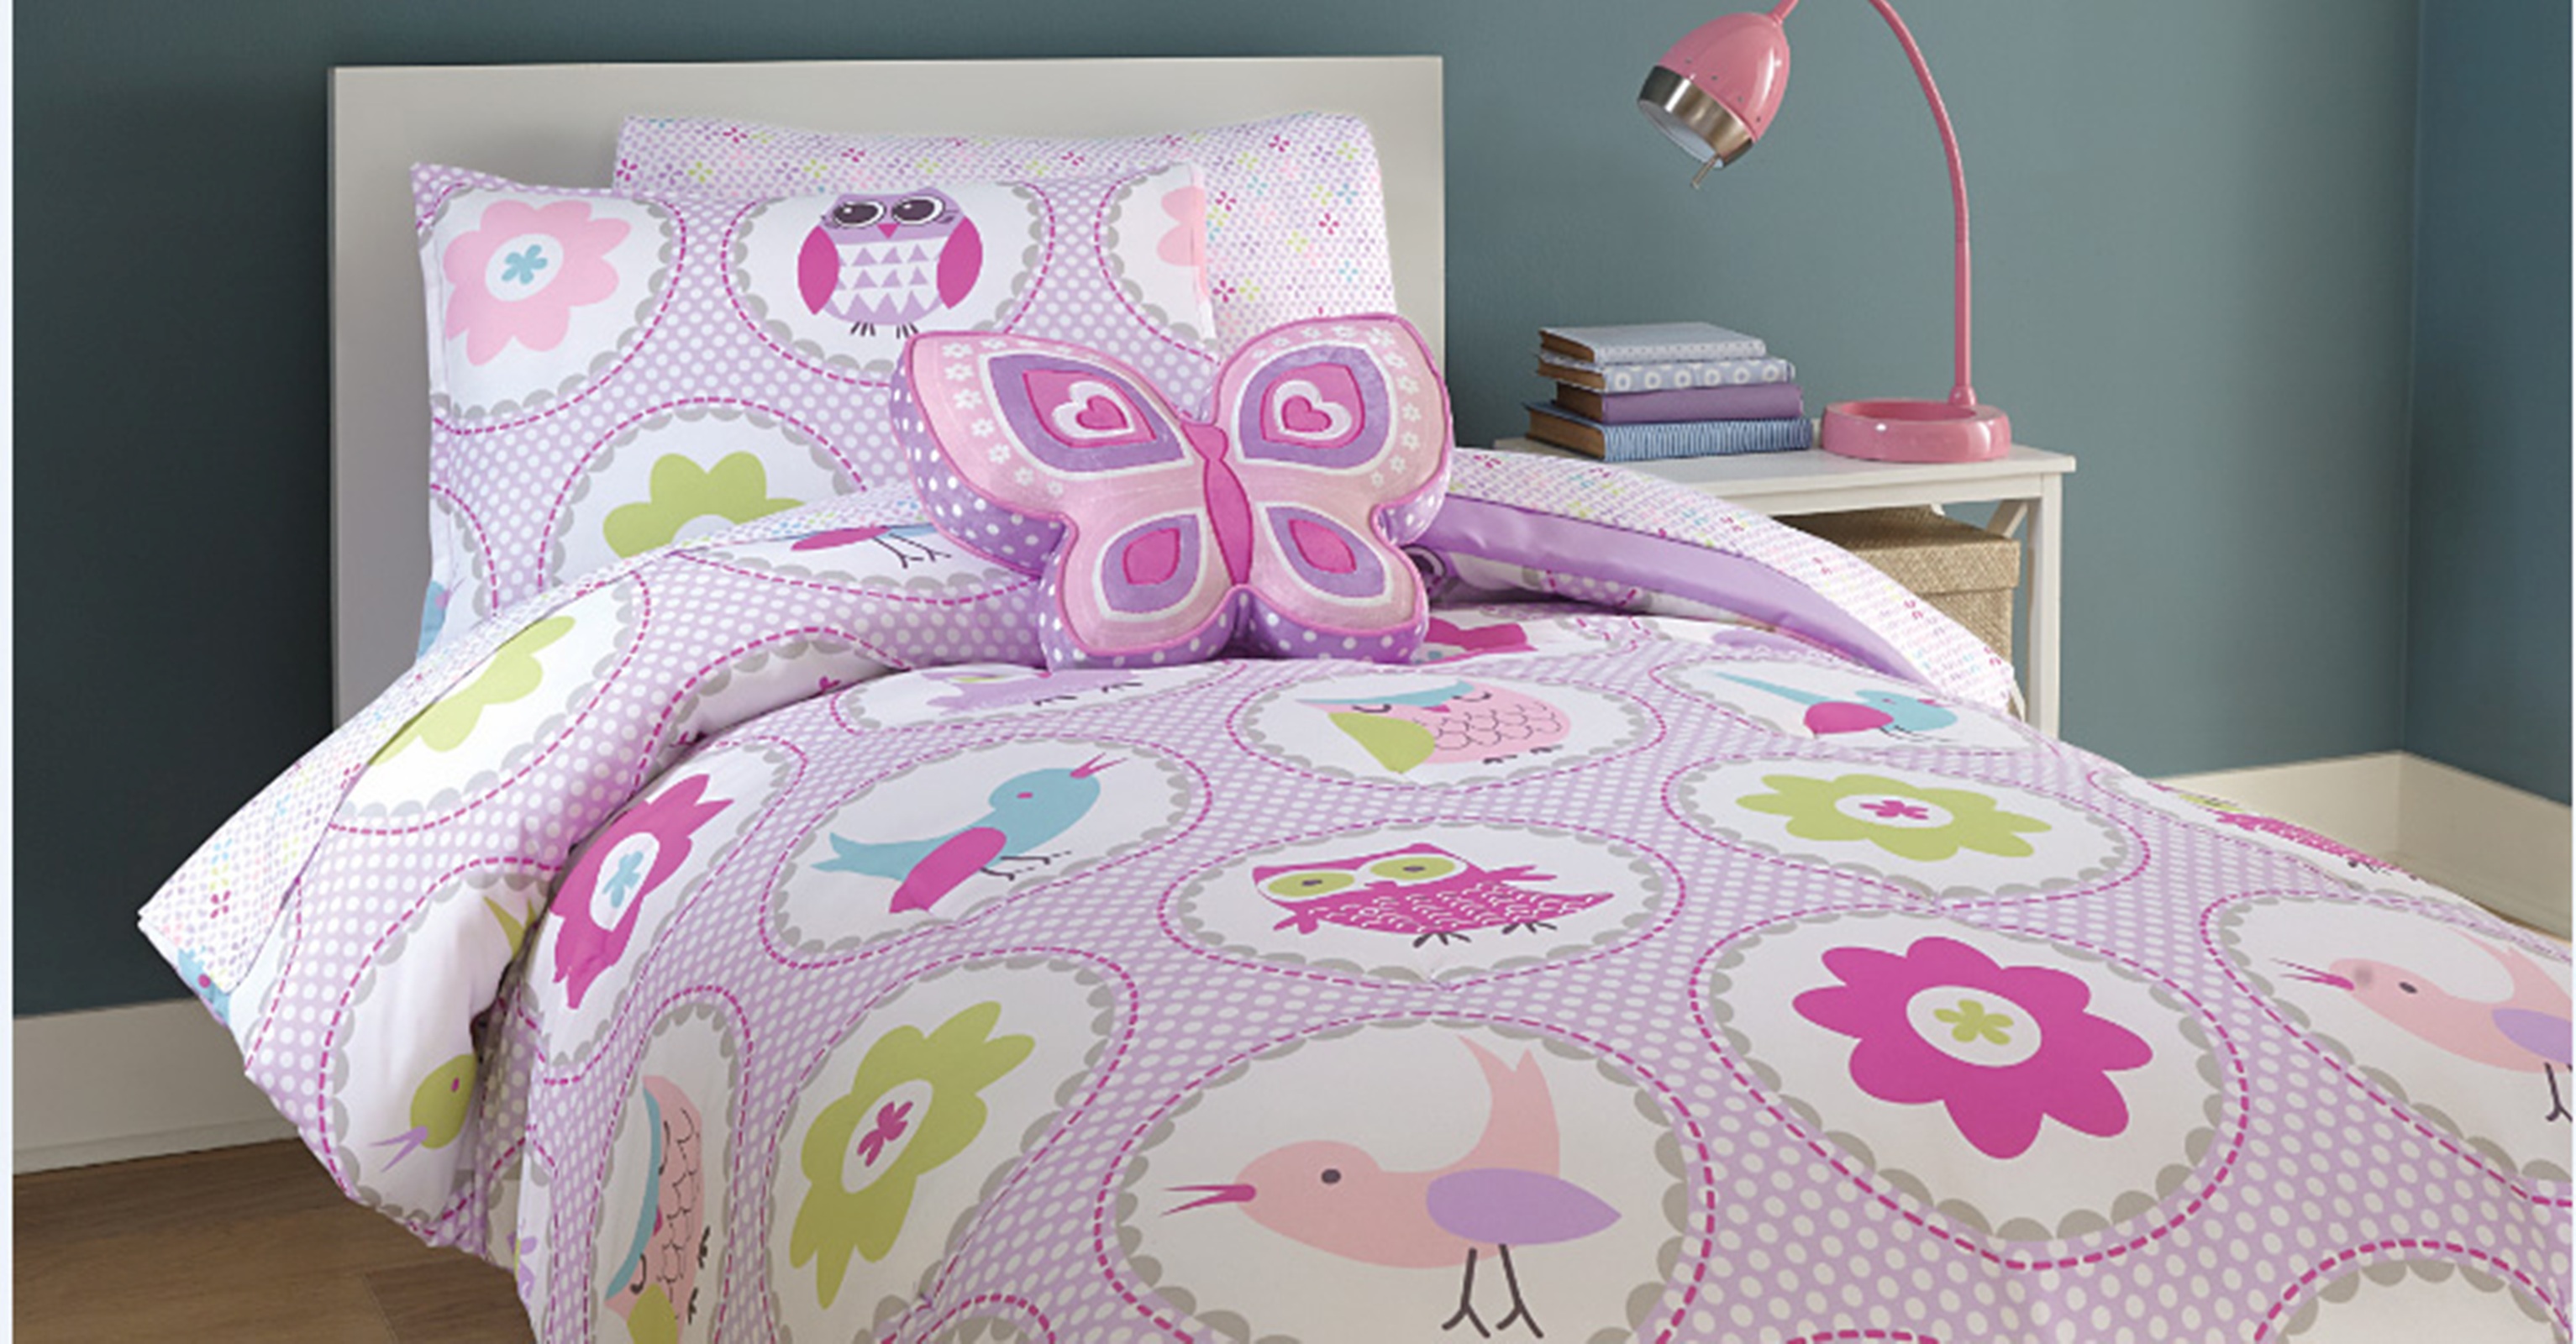 Cute Kid’s Comforter Sets $24.99